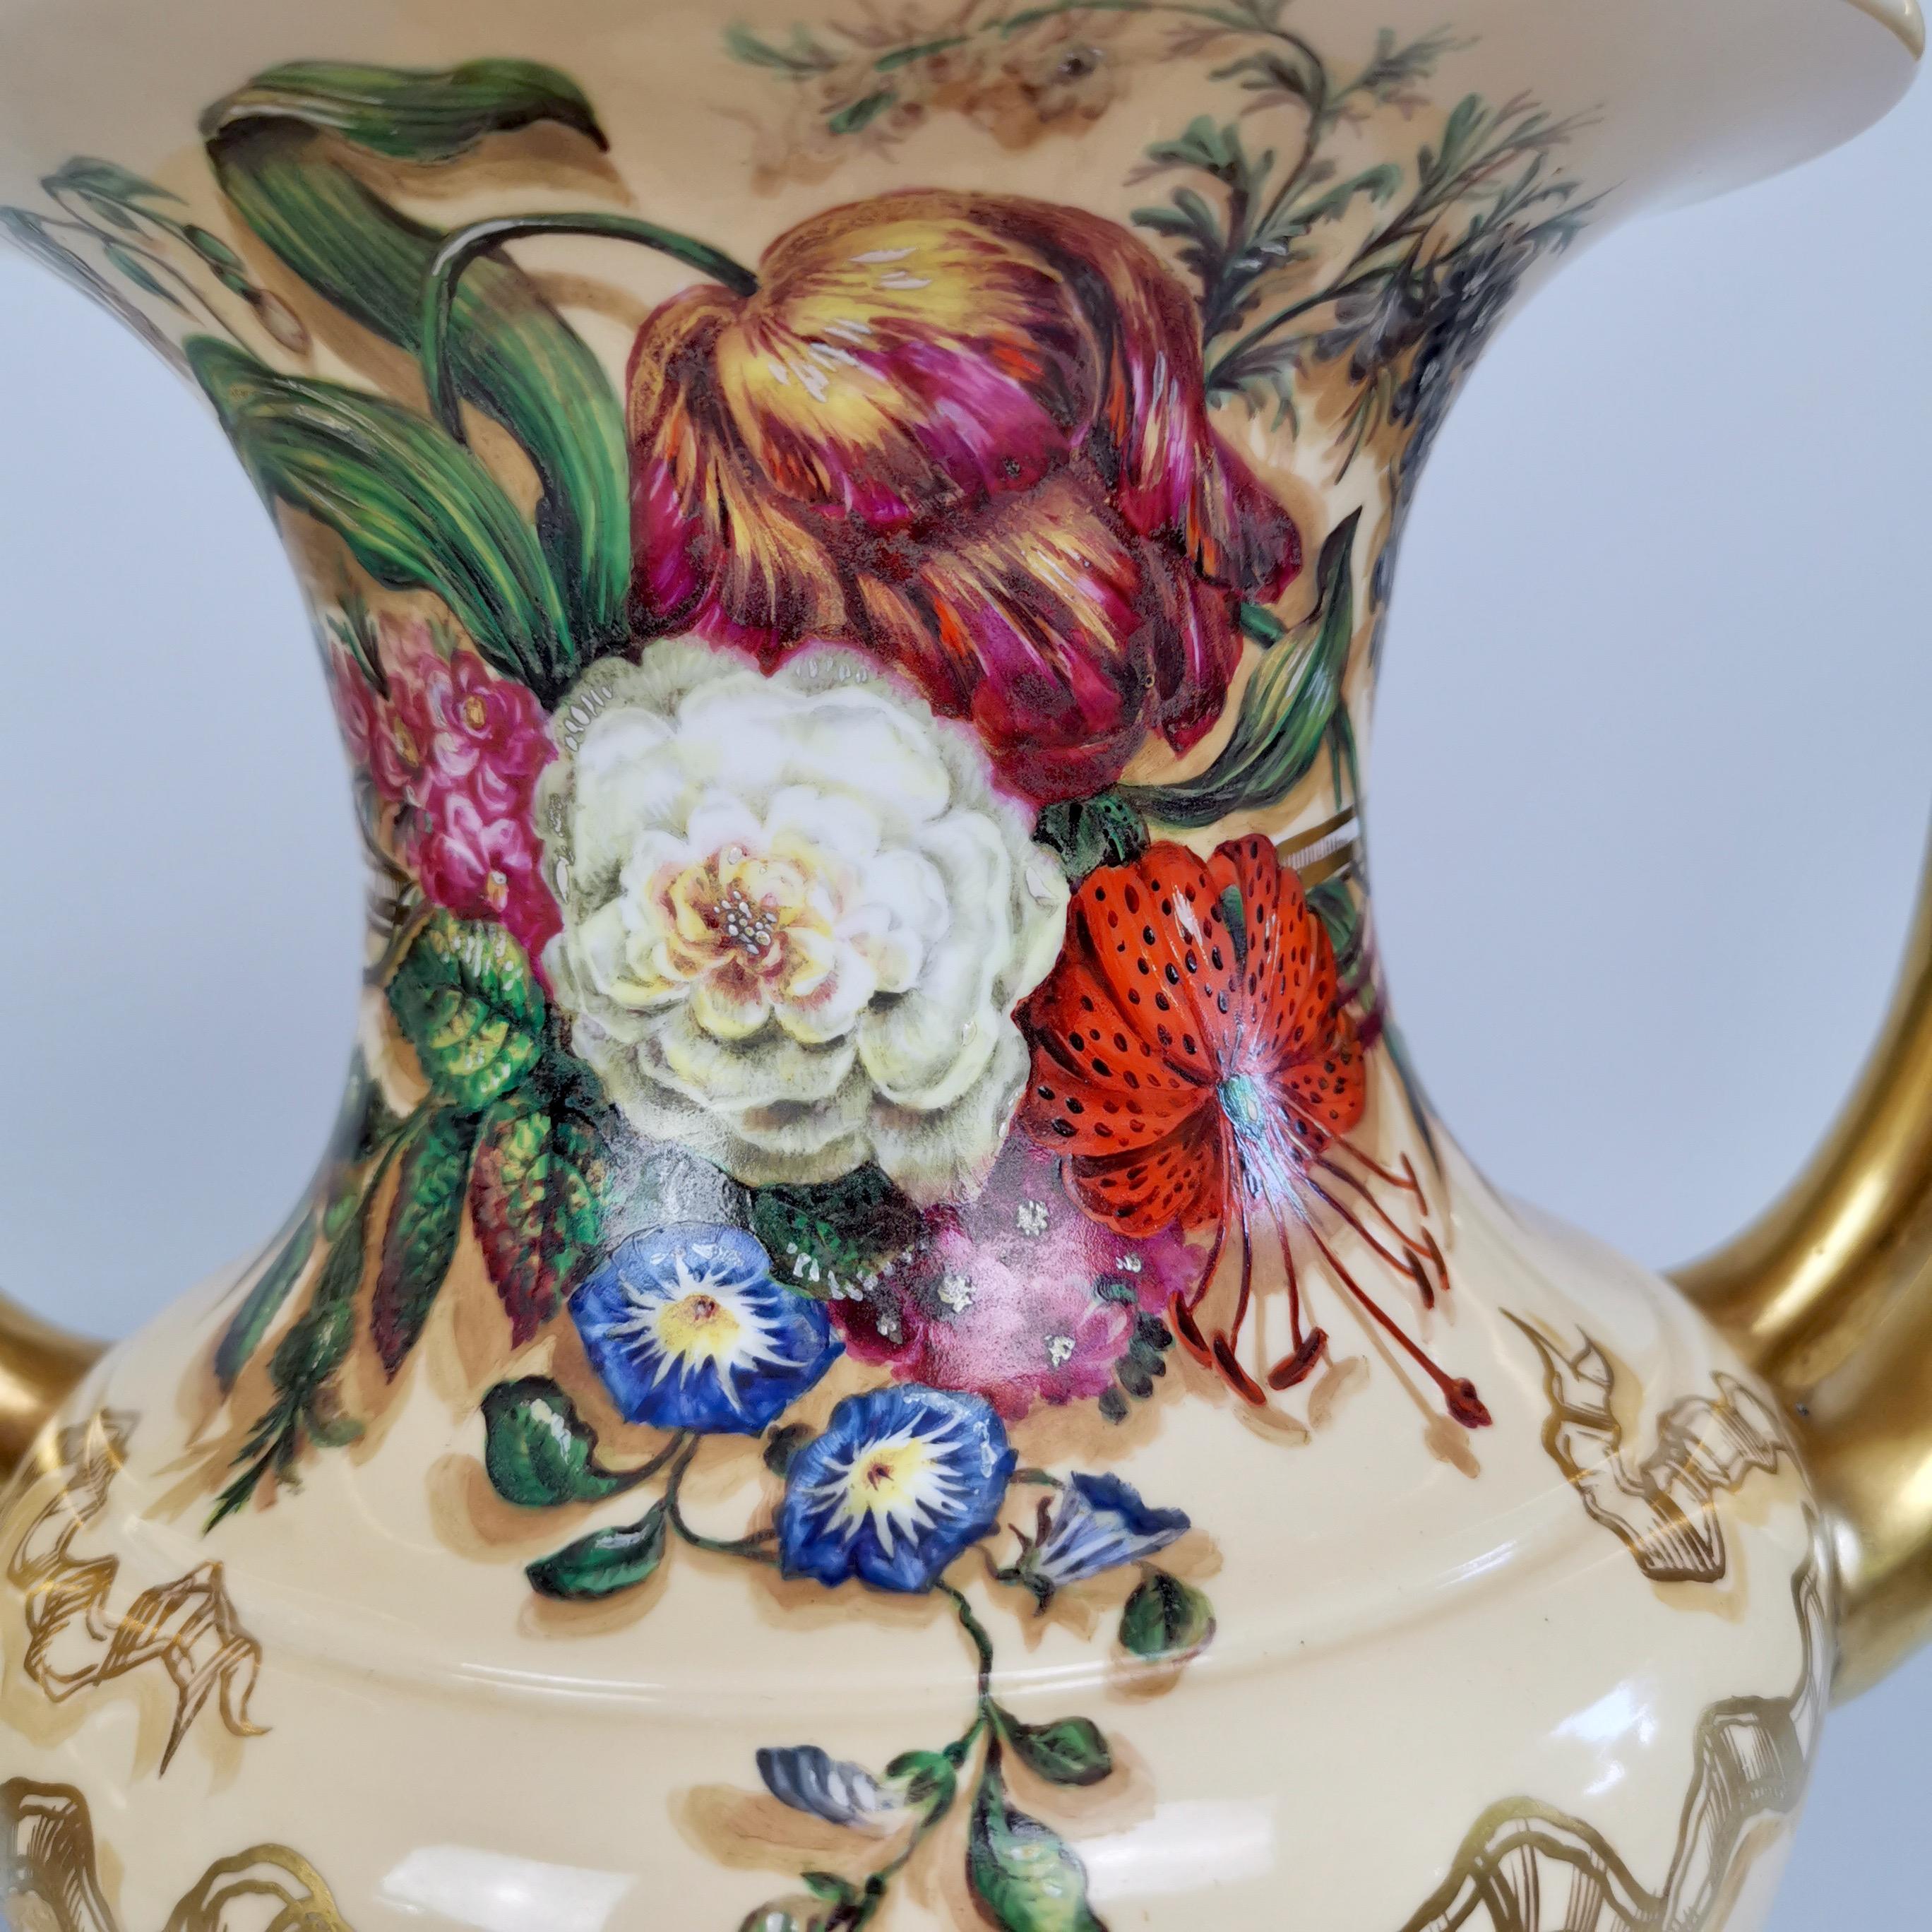 Mid-19th Century Copeland & Garrett Porcelain Vases, Flowers and Fruits, Rococo Revival 1833-1847